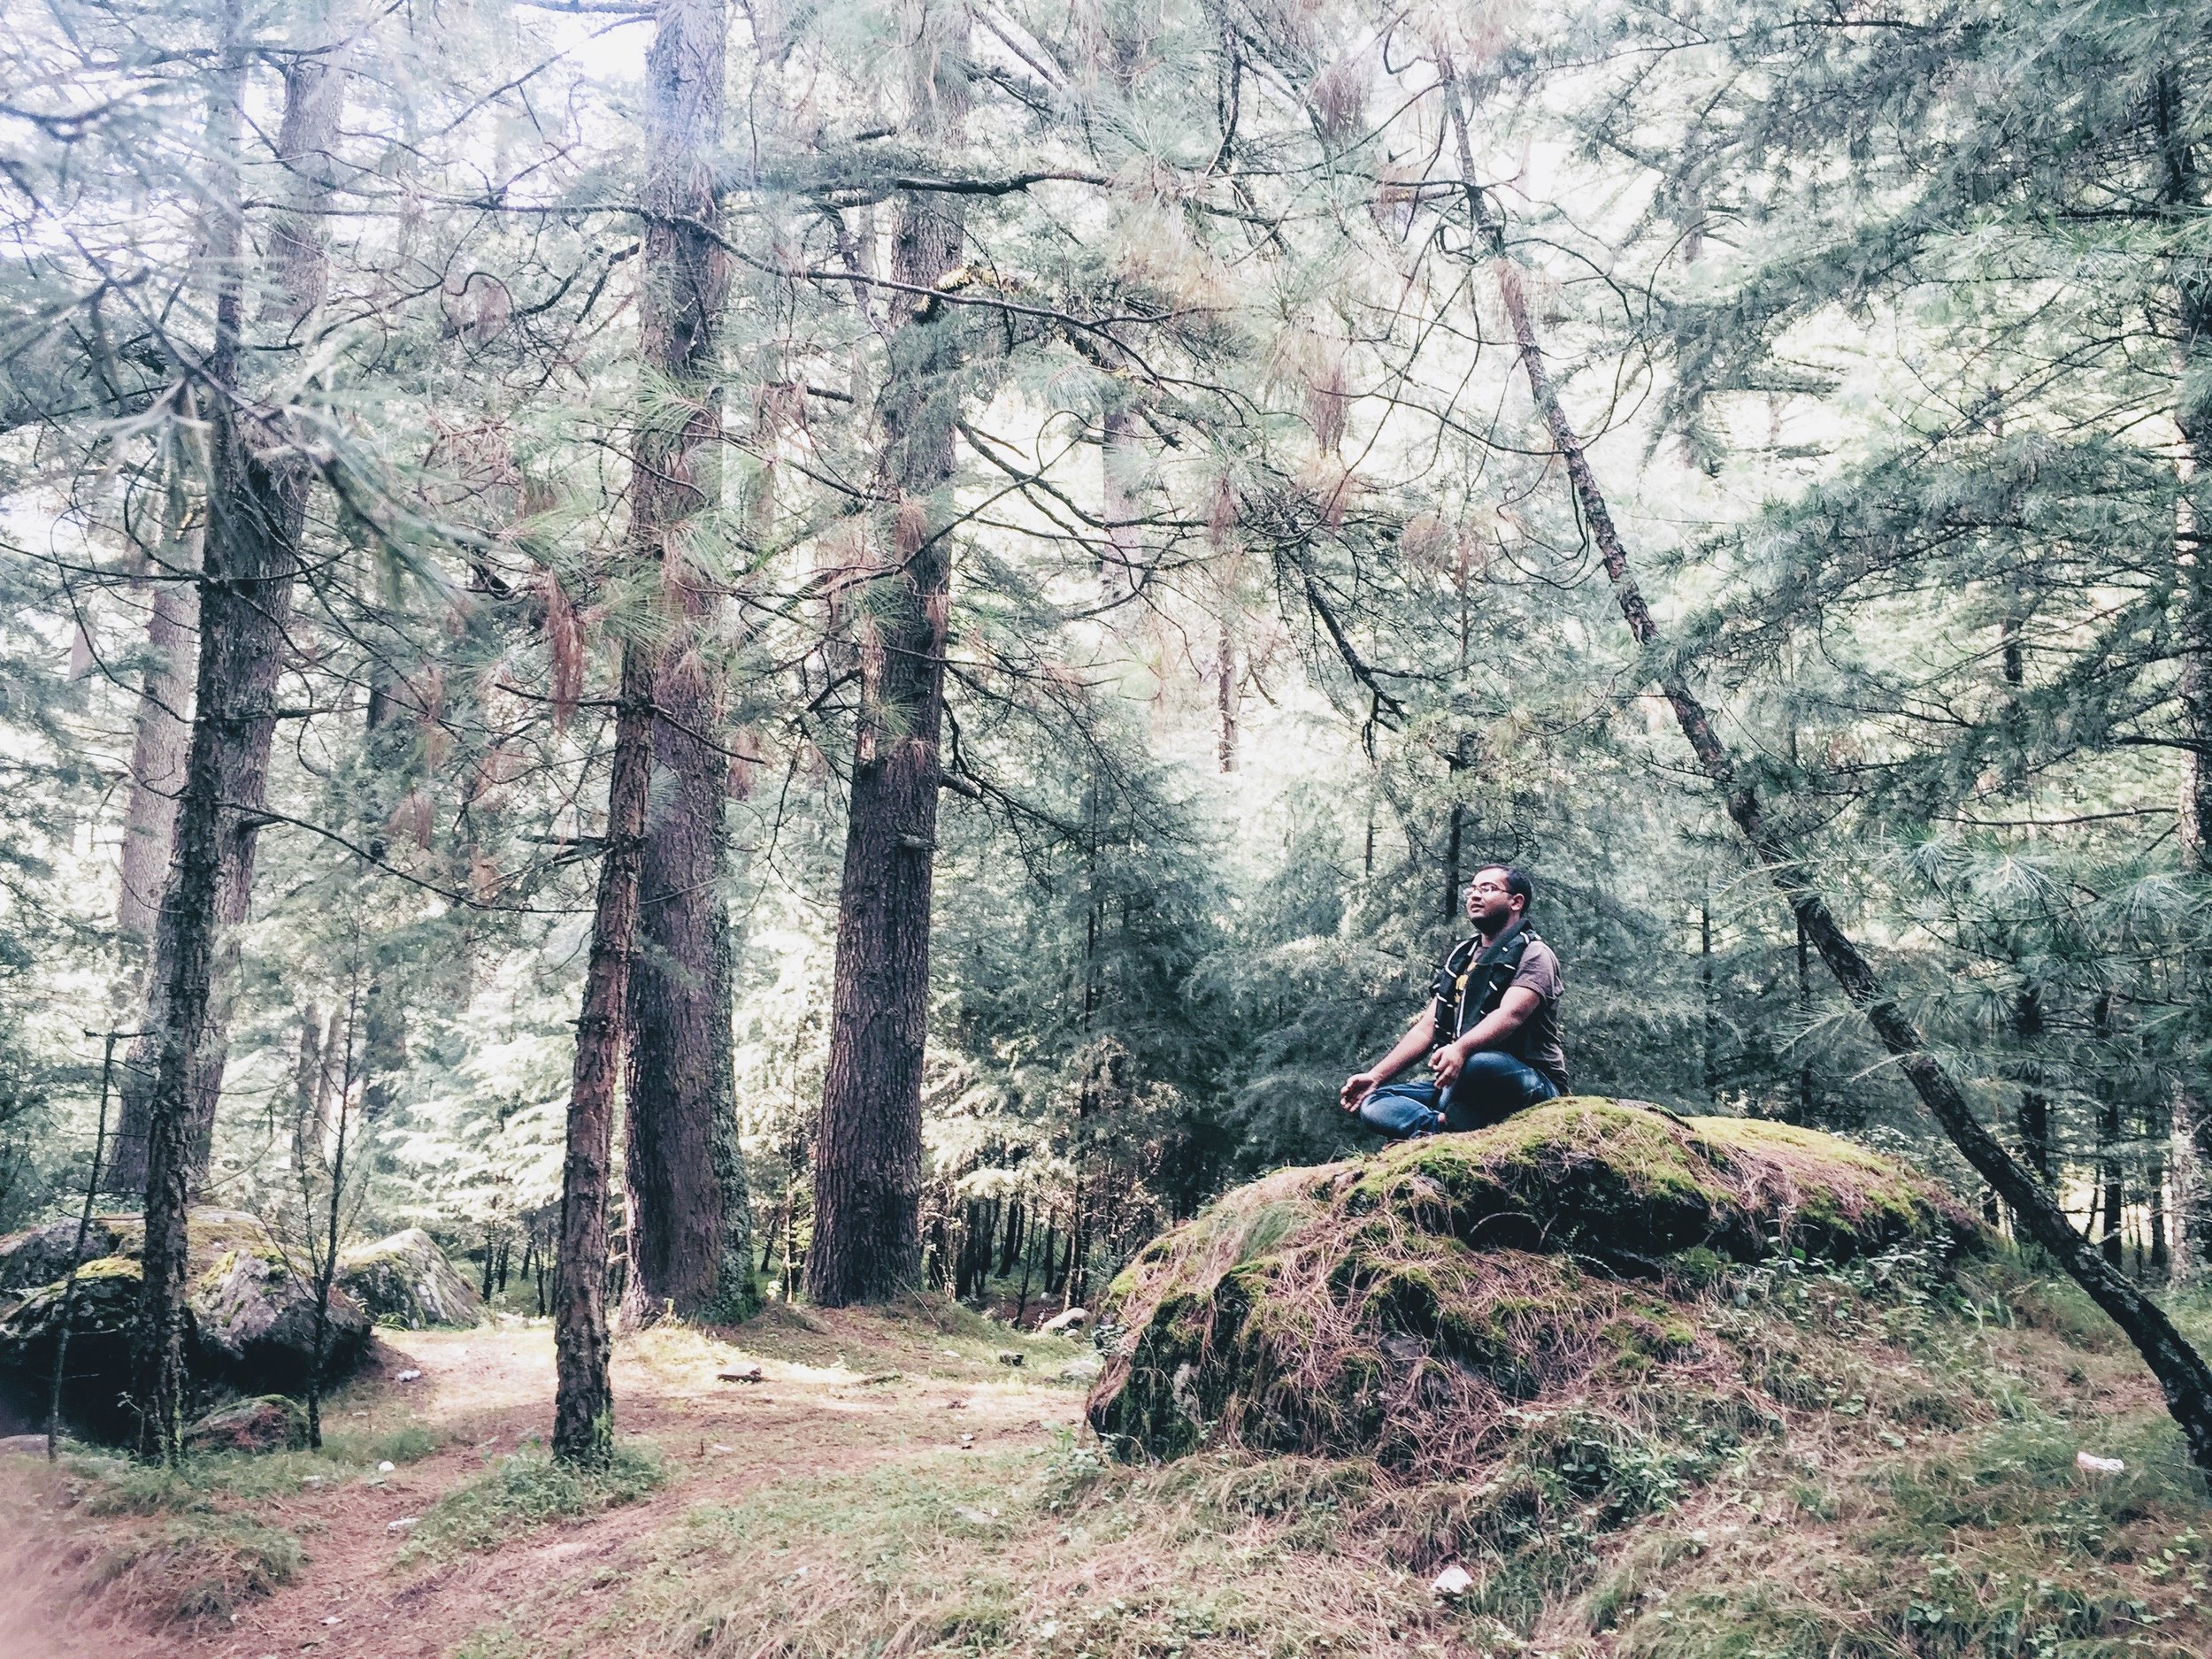 Meditate among the woods